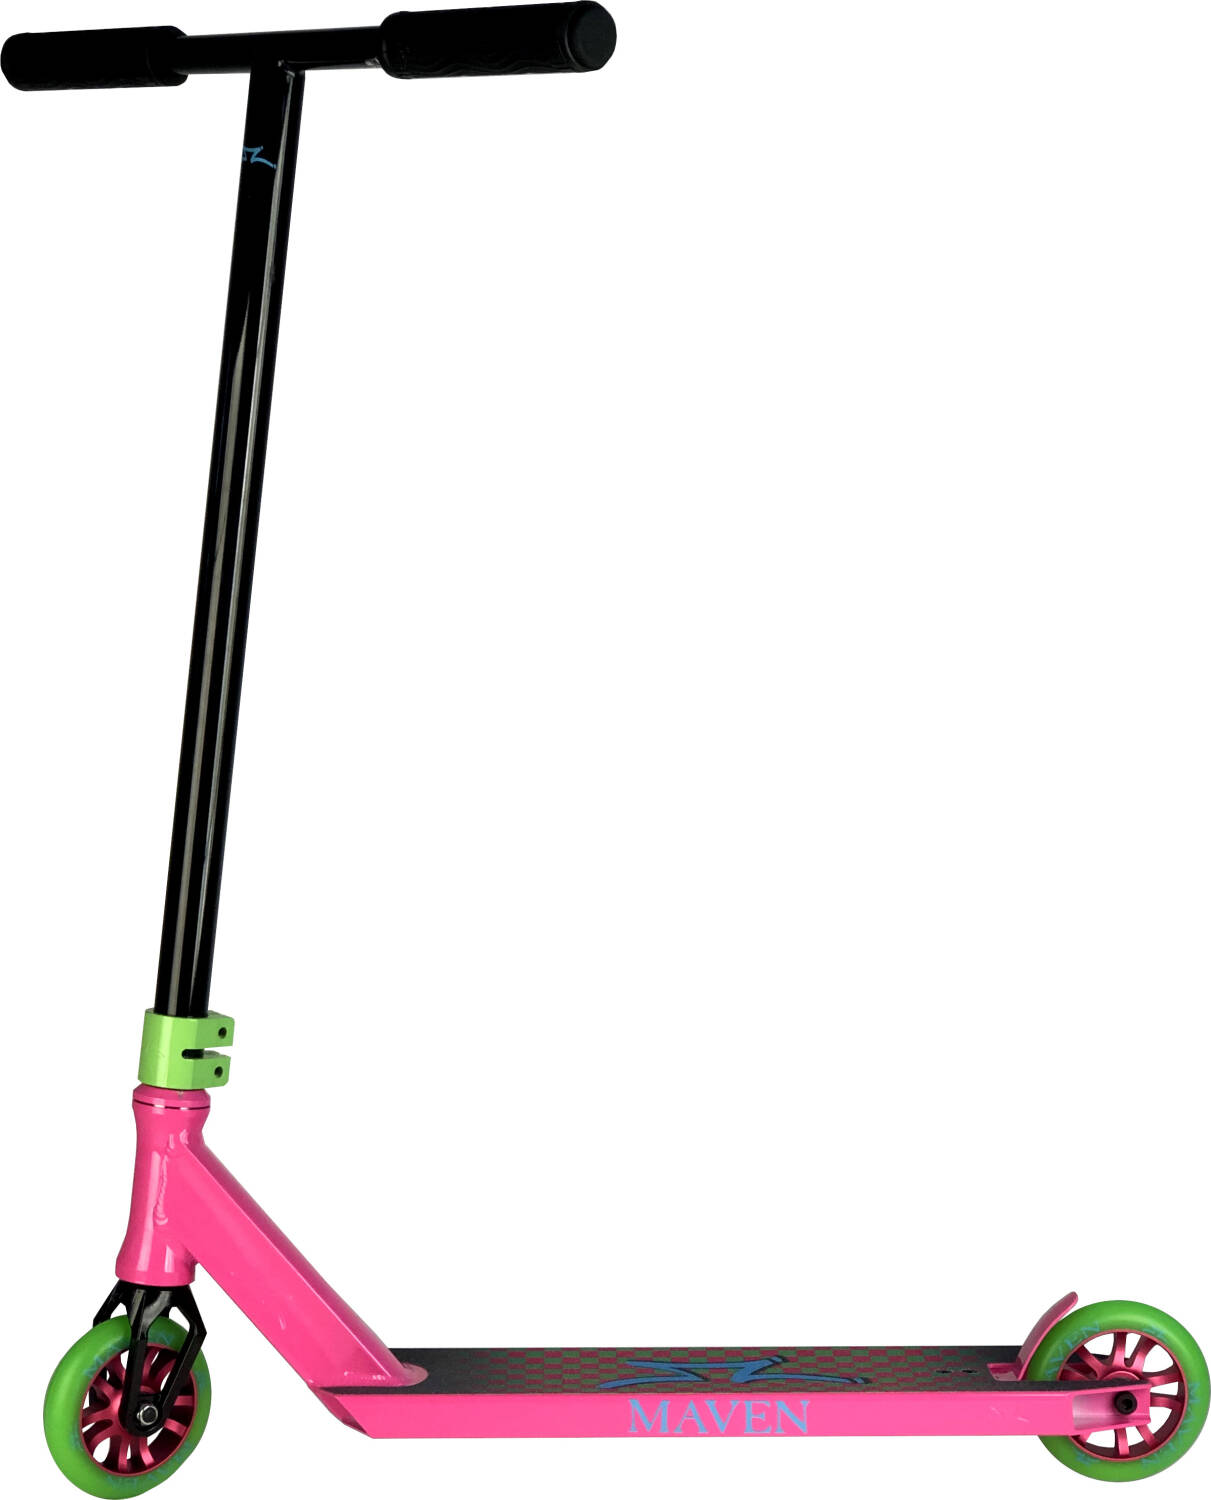 AO Maven 2020 Pro Scooter - Pink